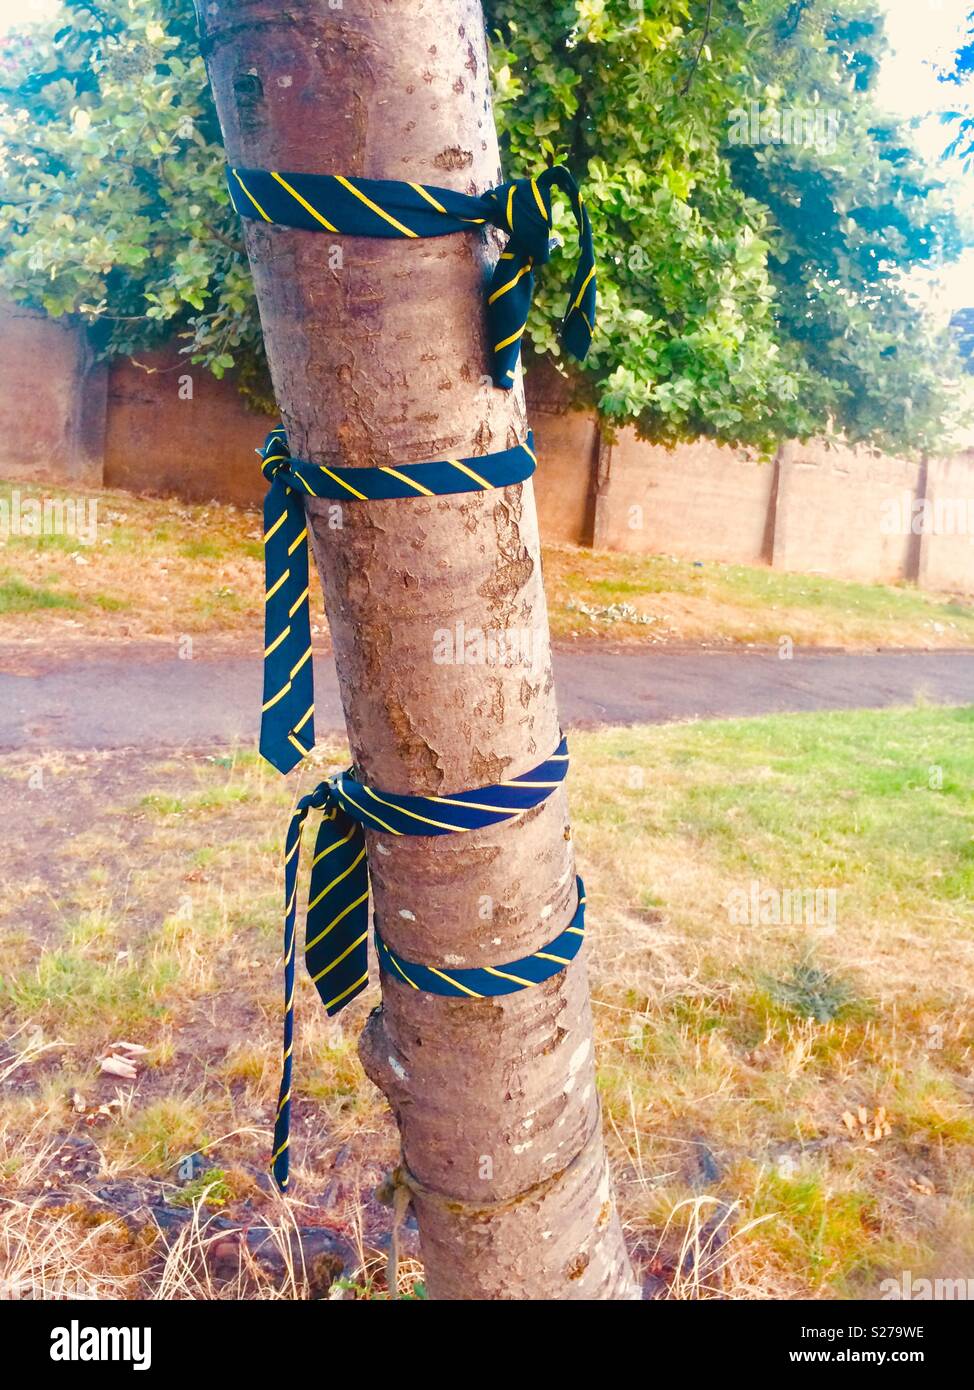 School ties tied around a tree trunk Stock Photo